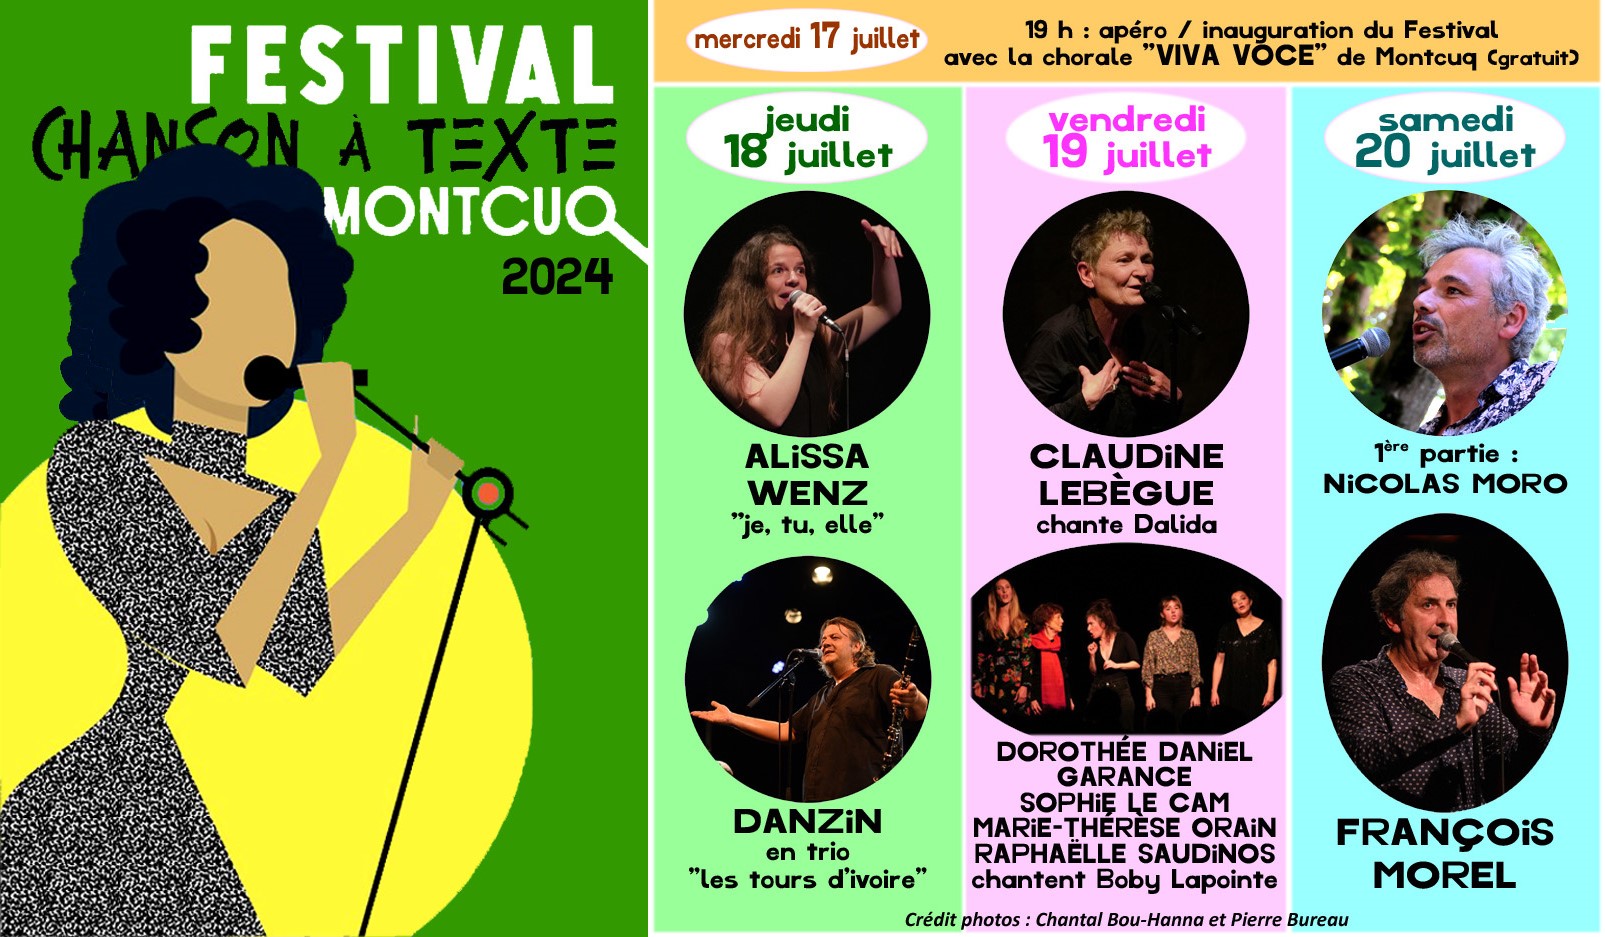 Figeac : Festival de la Chanson à Texte de Montcuq : Nicolas Moro